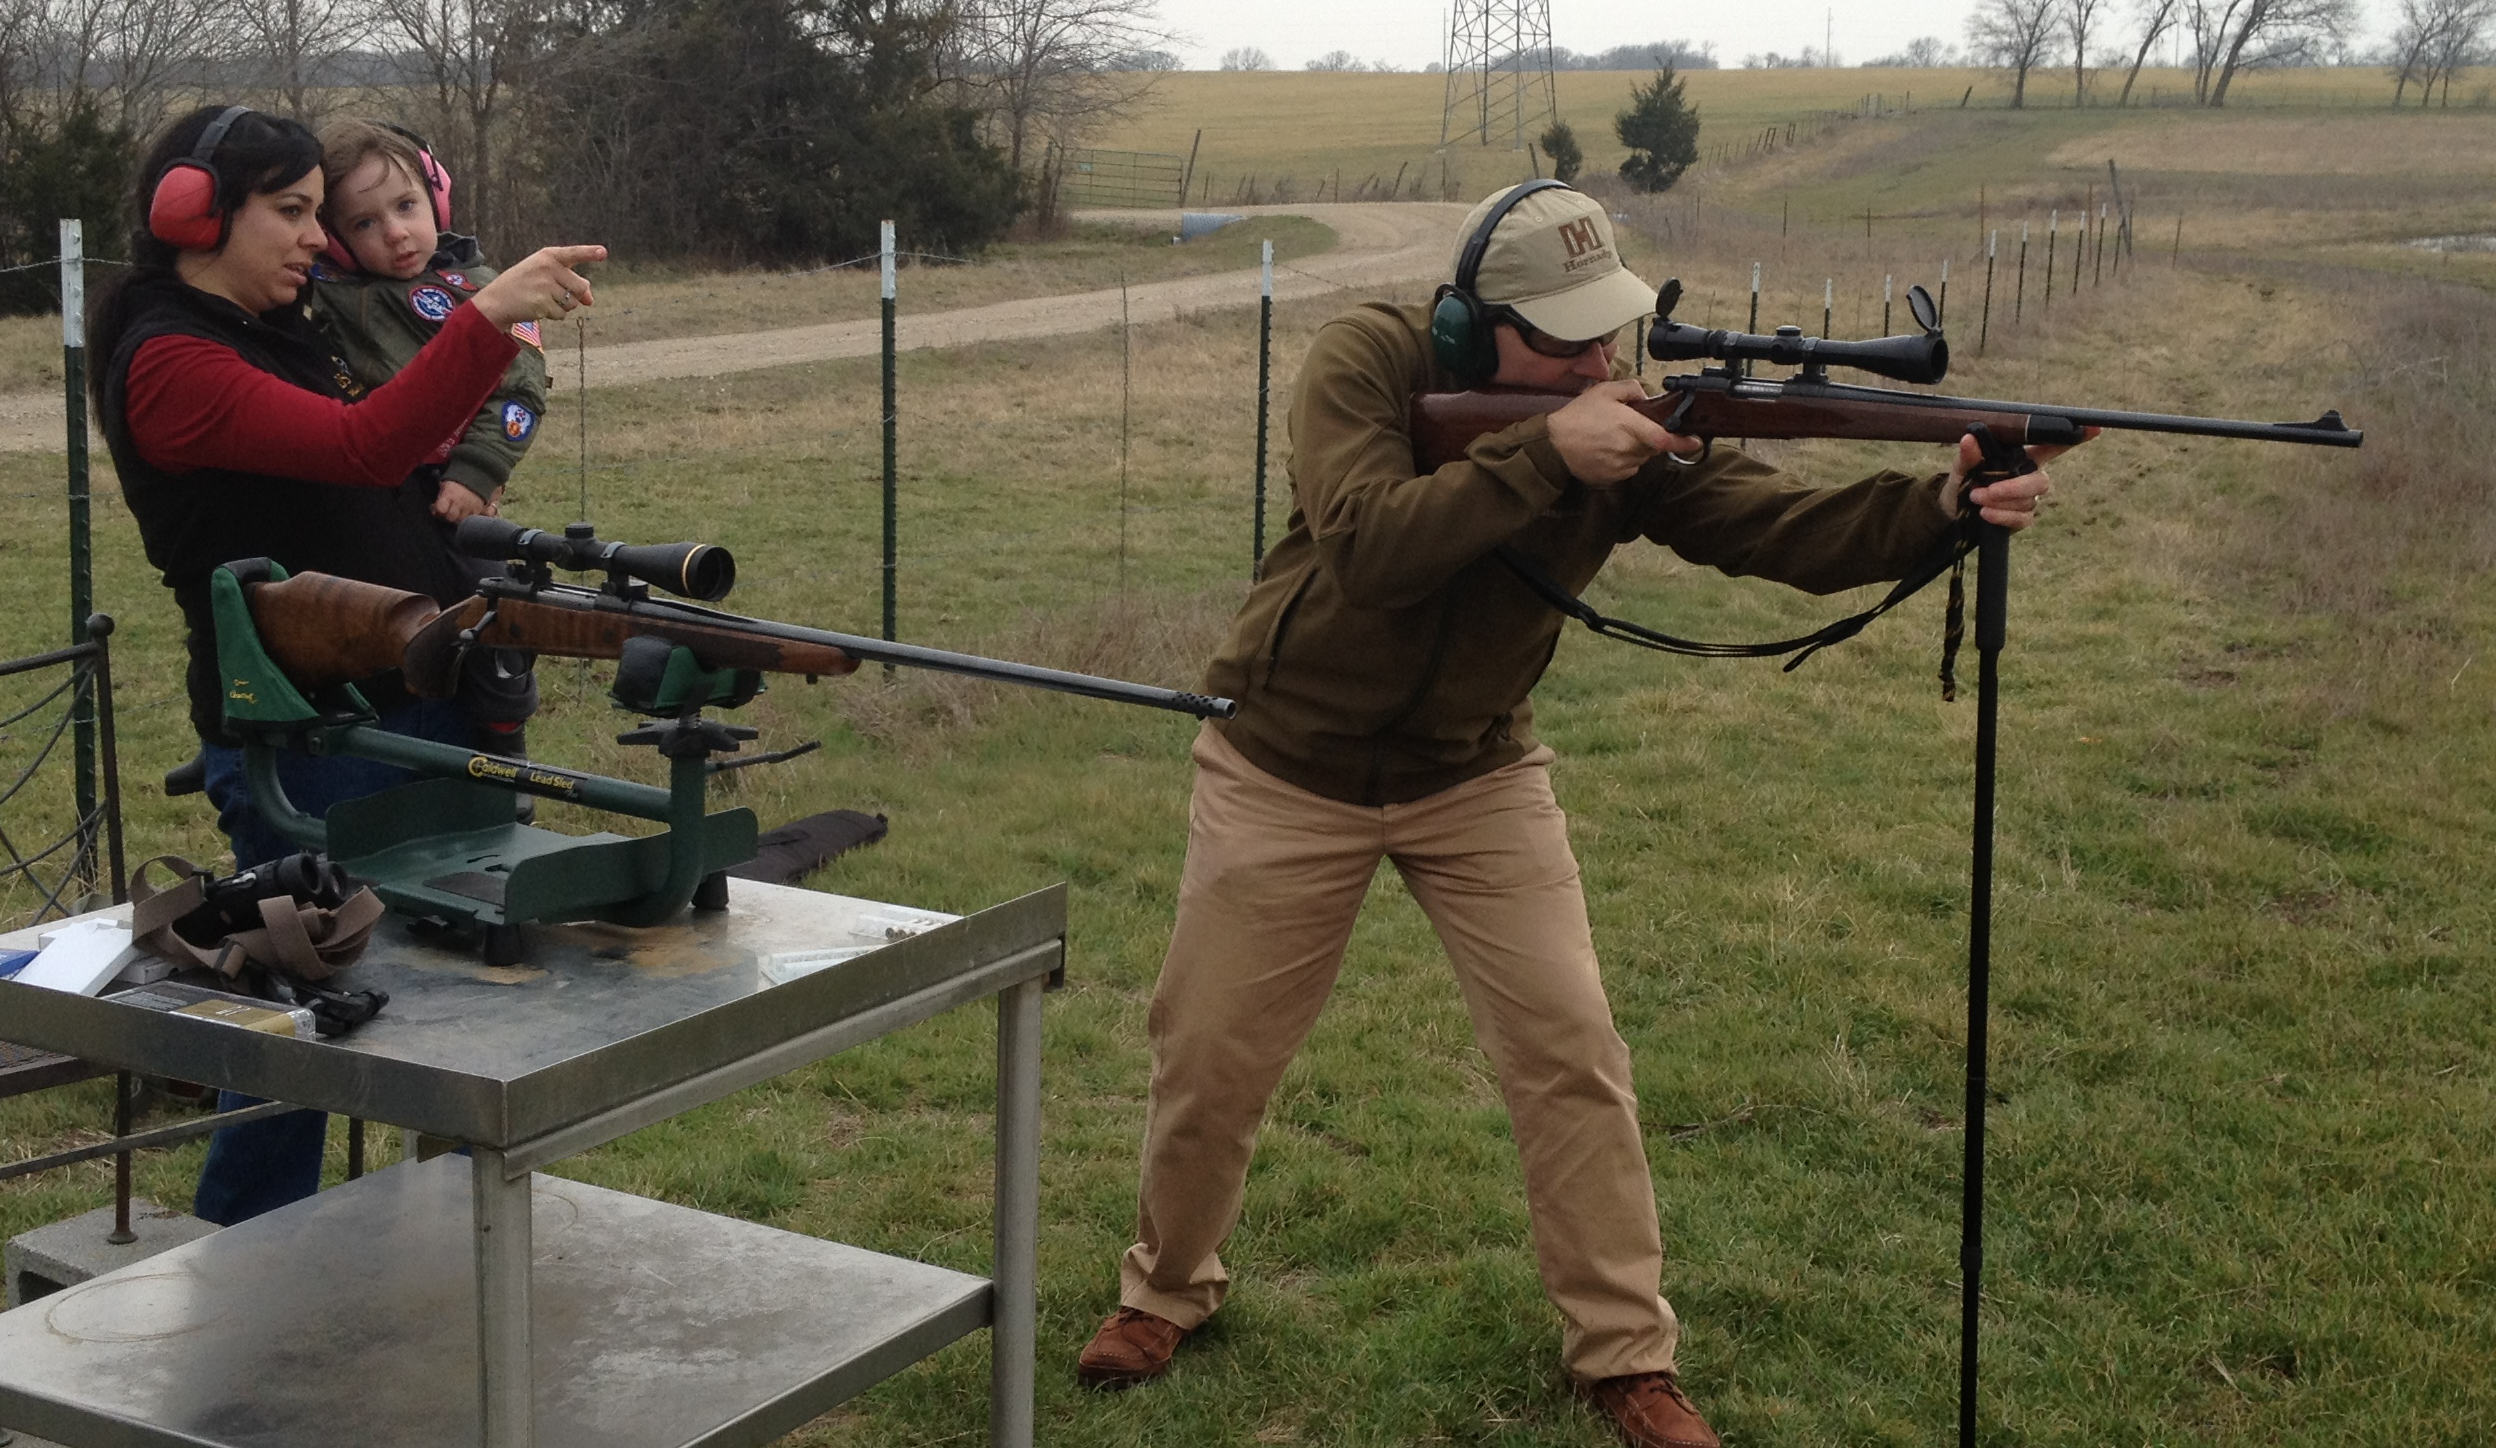 700 Yard Rifle Range Close To DallasPoetryShootingClubcom